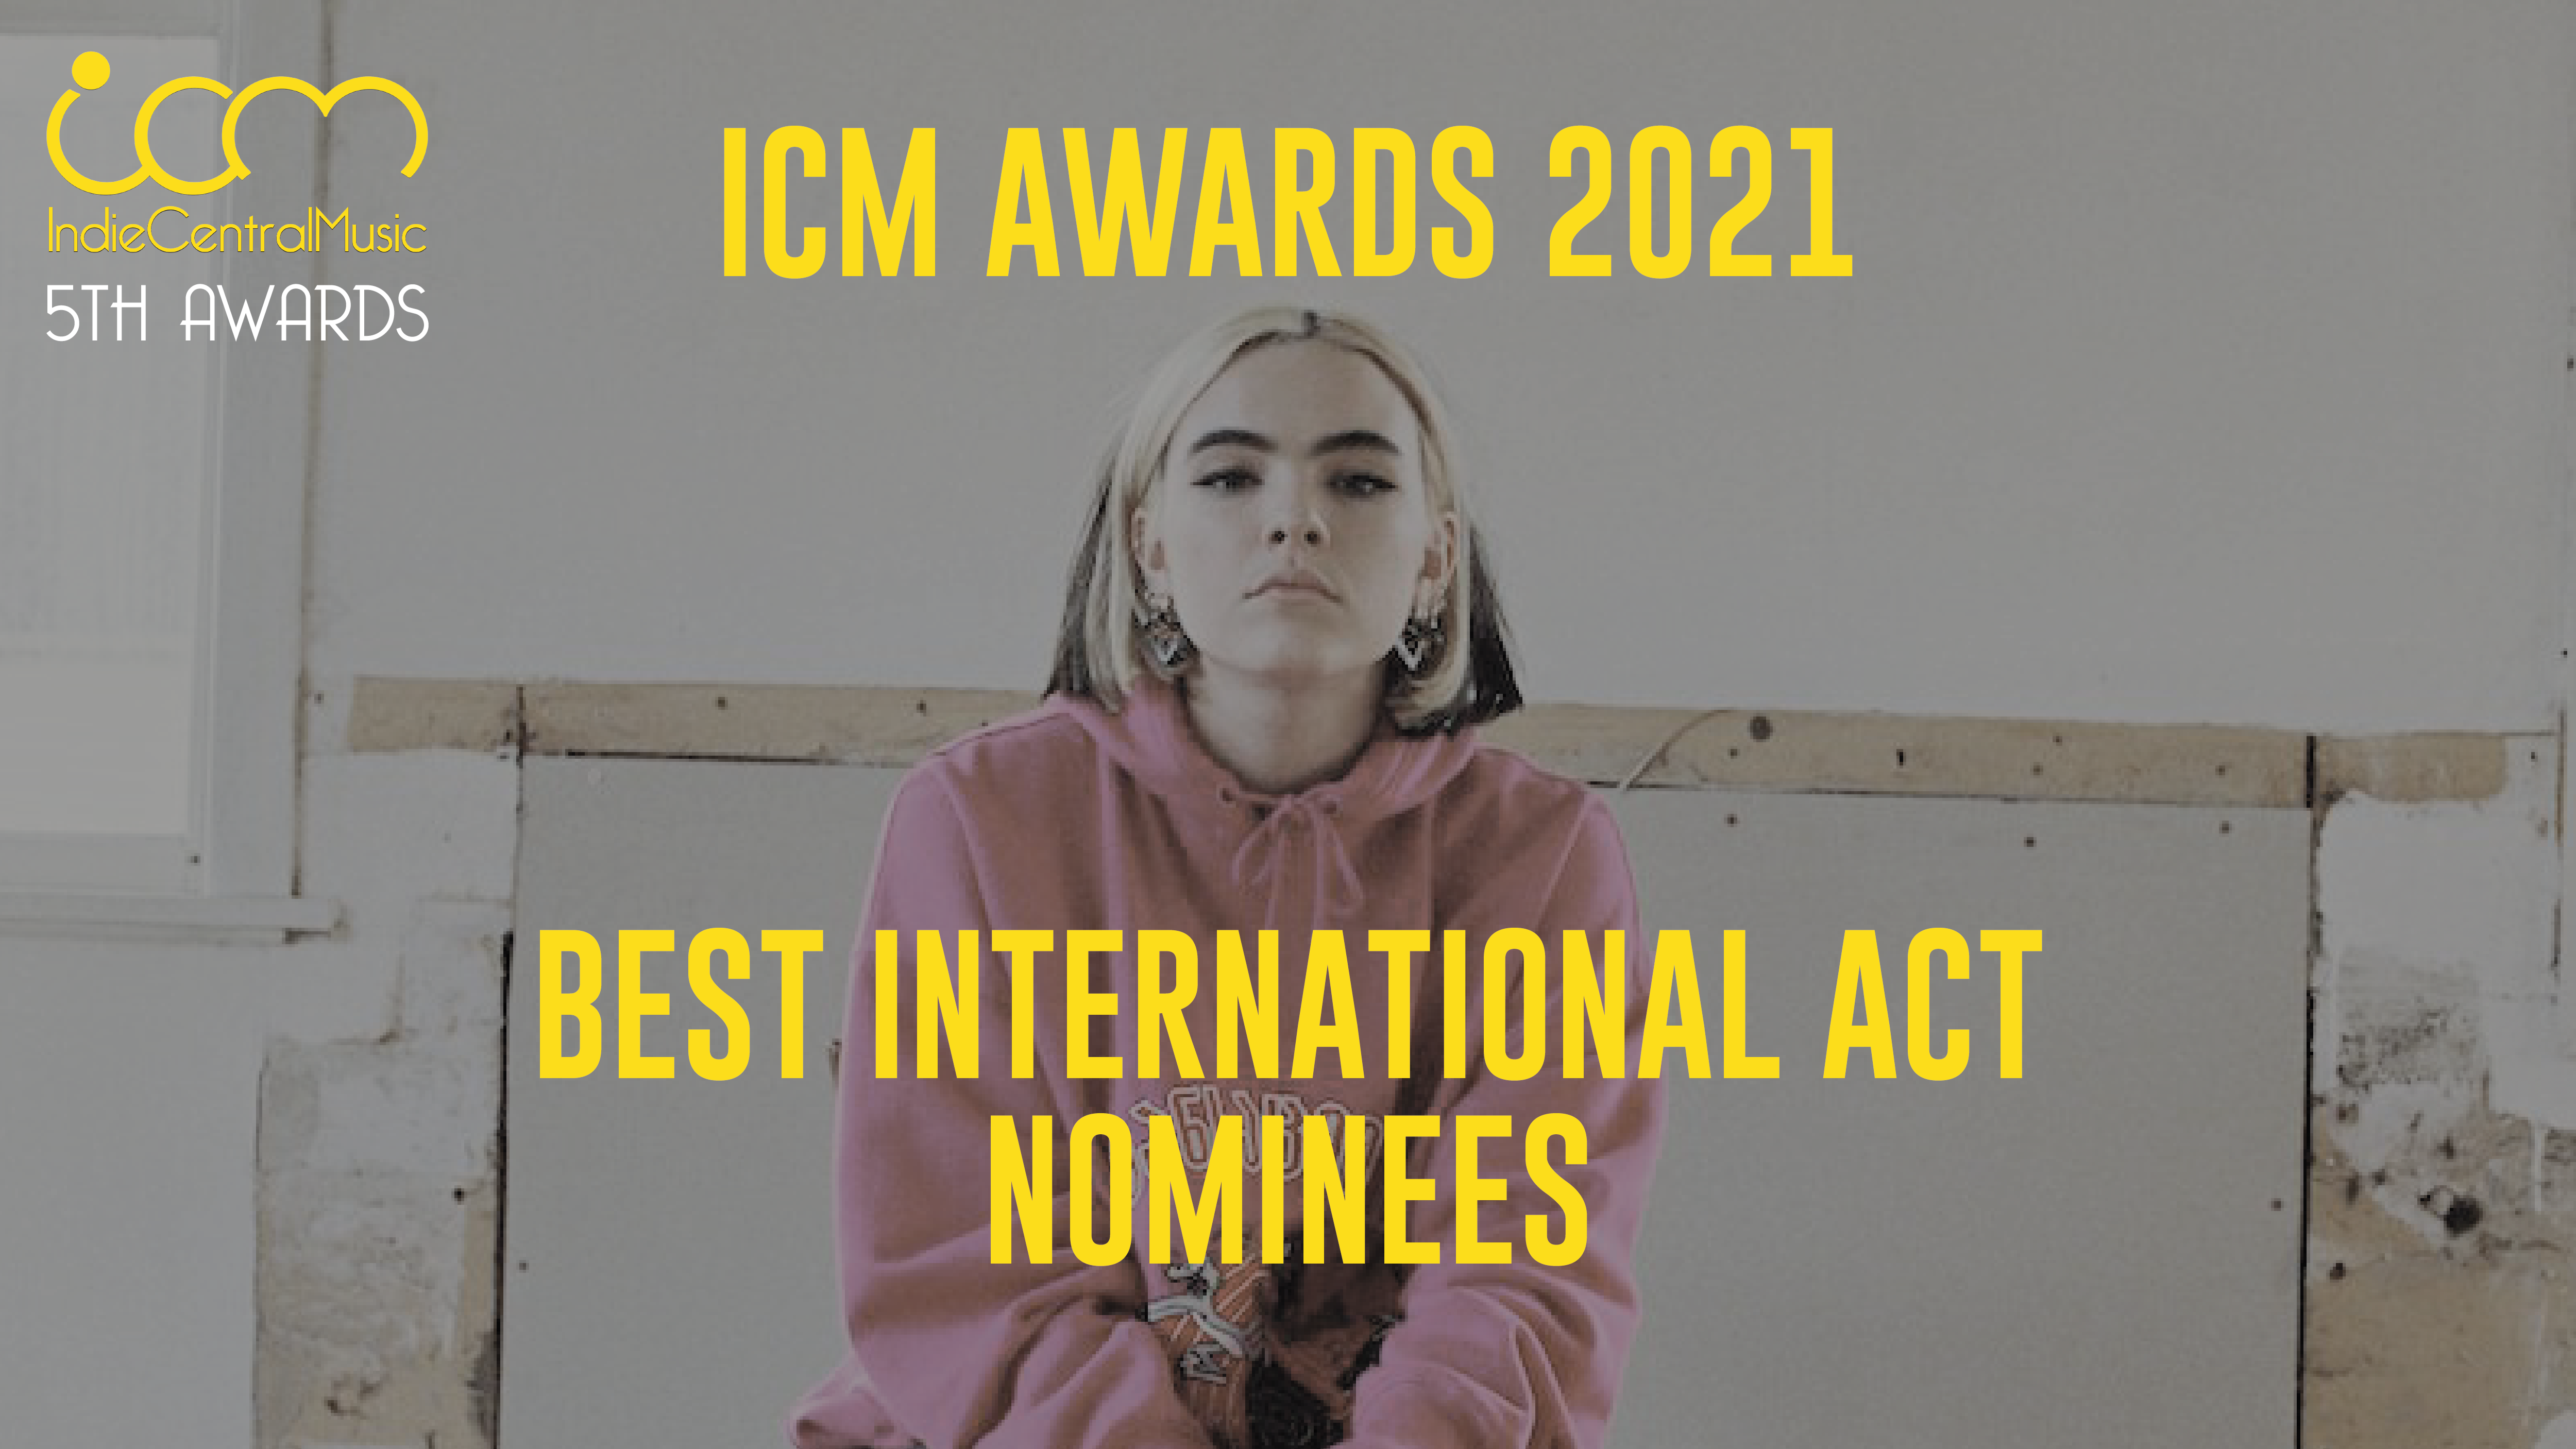 ICM Awards 2021 Best International Act nominees IndieCentralMusic